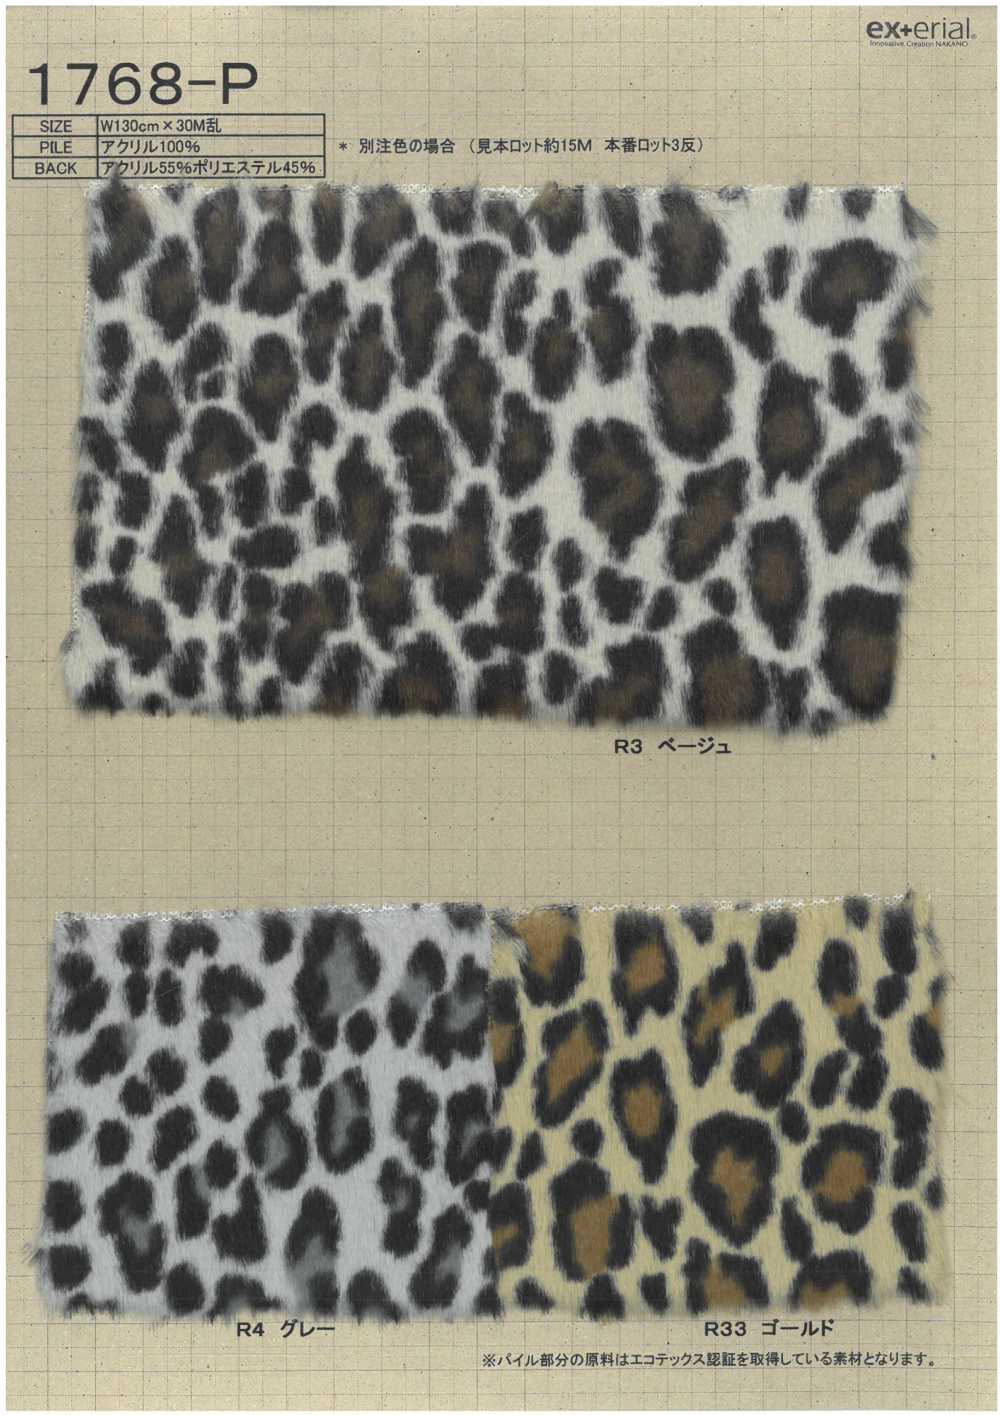 1768-P Piel Artesanal [leopardo][Fabrica Textil] Industria De La Media Nakano